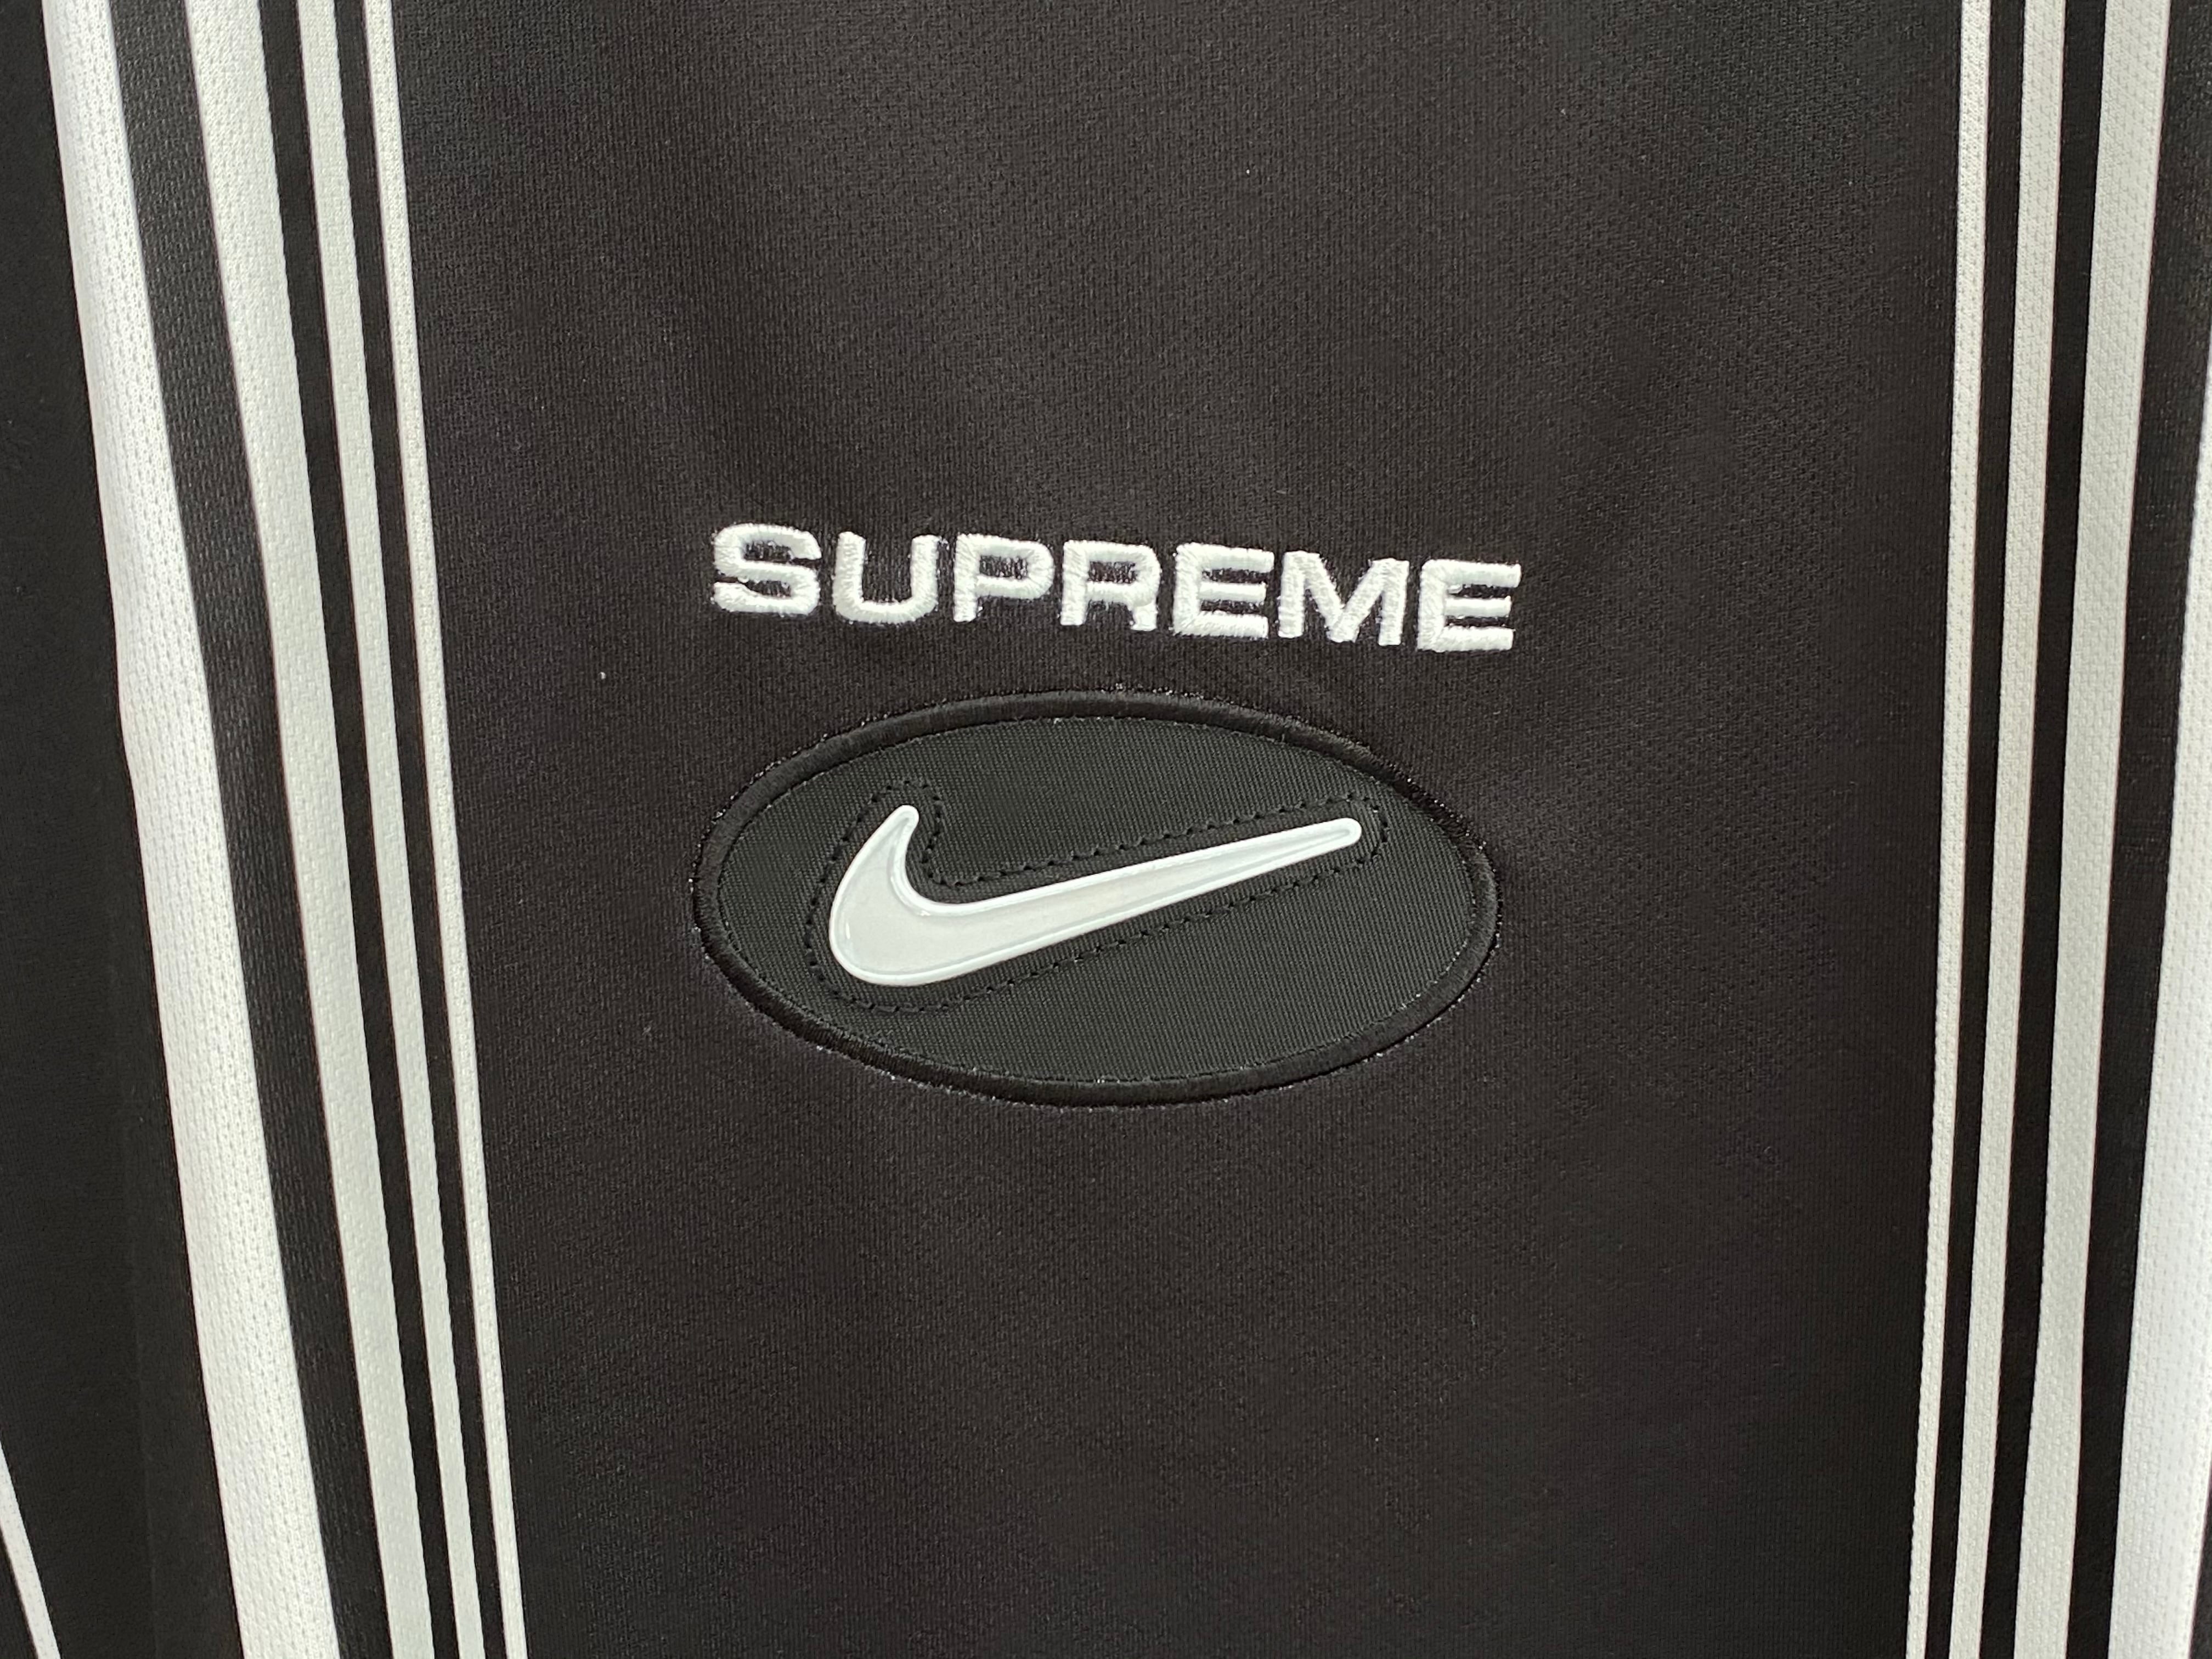 Supreme Nike Jewel Stripe Soccer Jersey Black